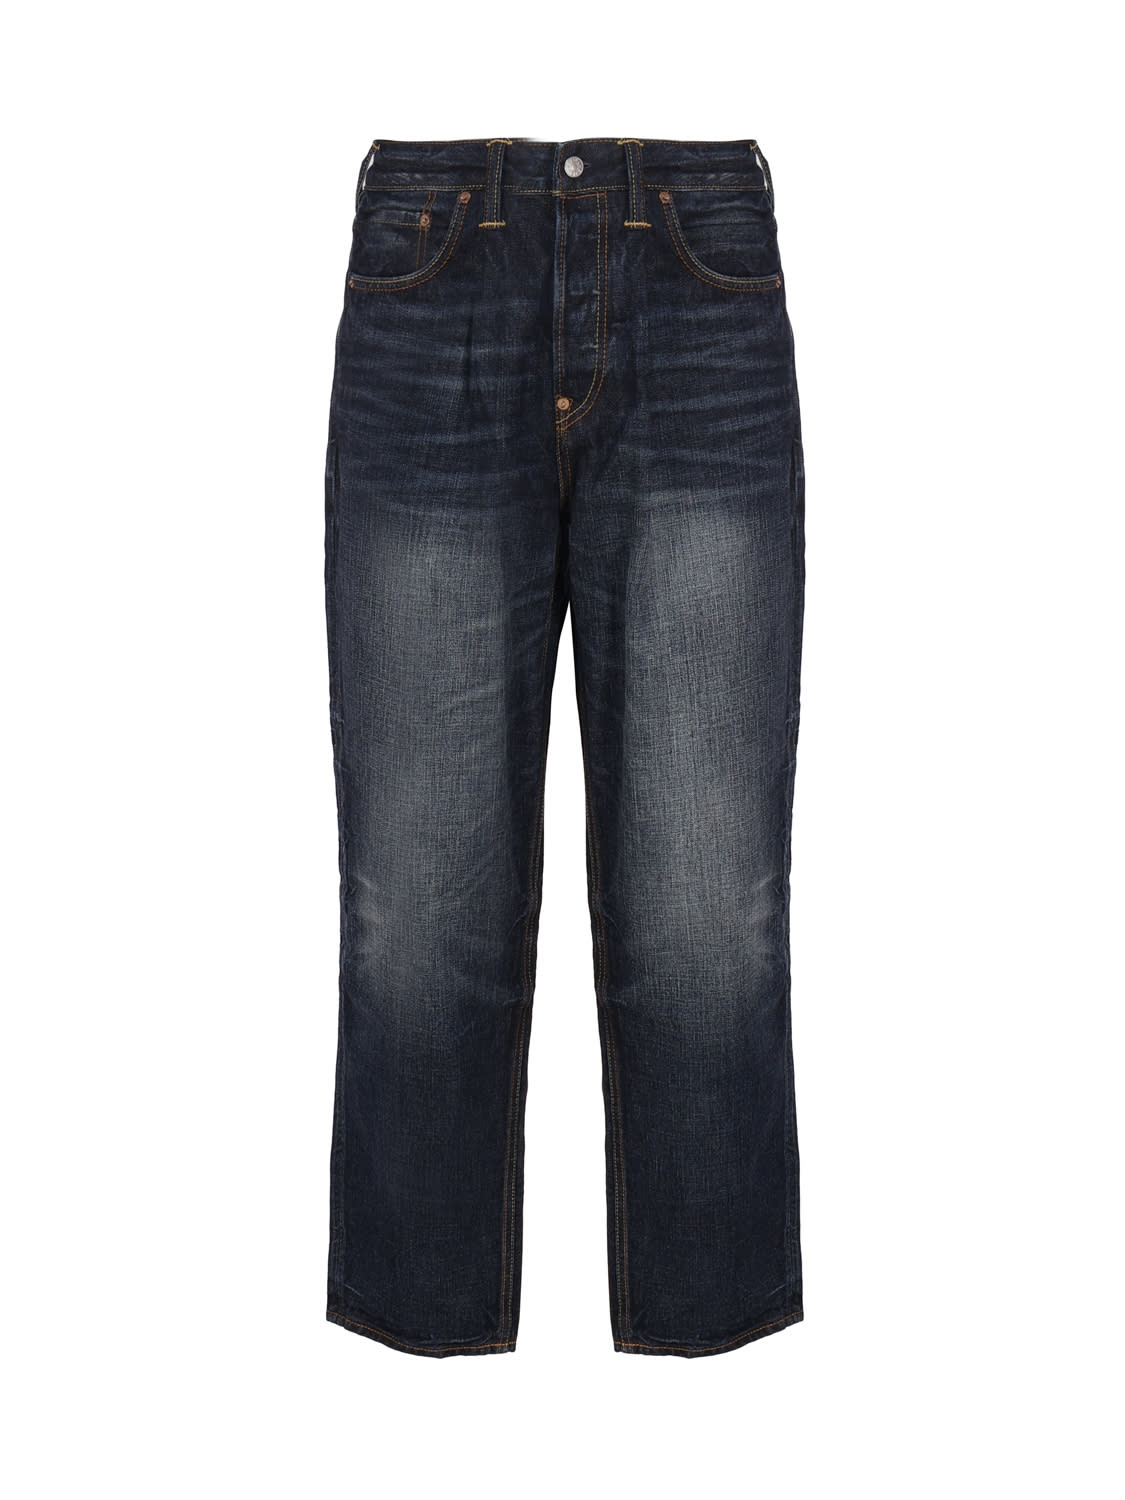 Evisu Cotton Denim Jeans In Blue Denim